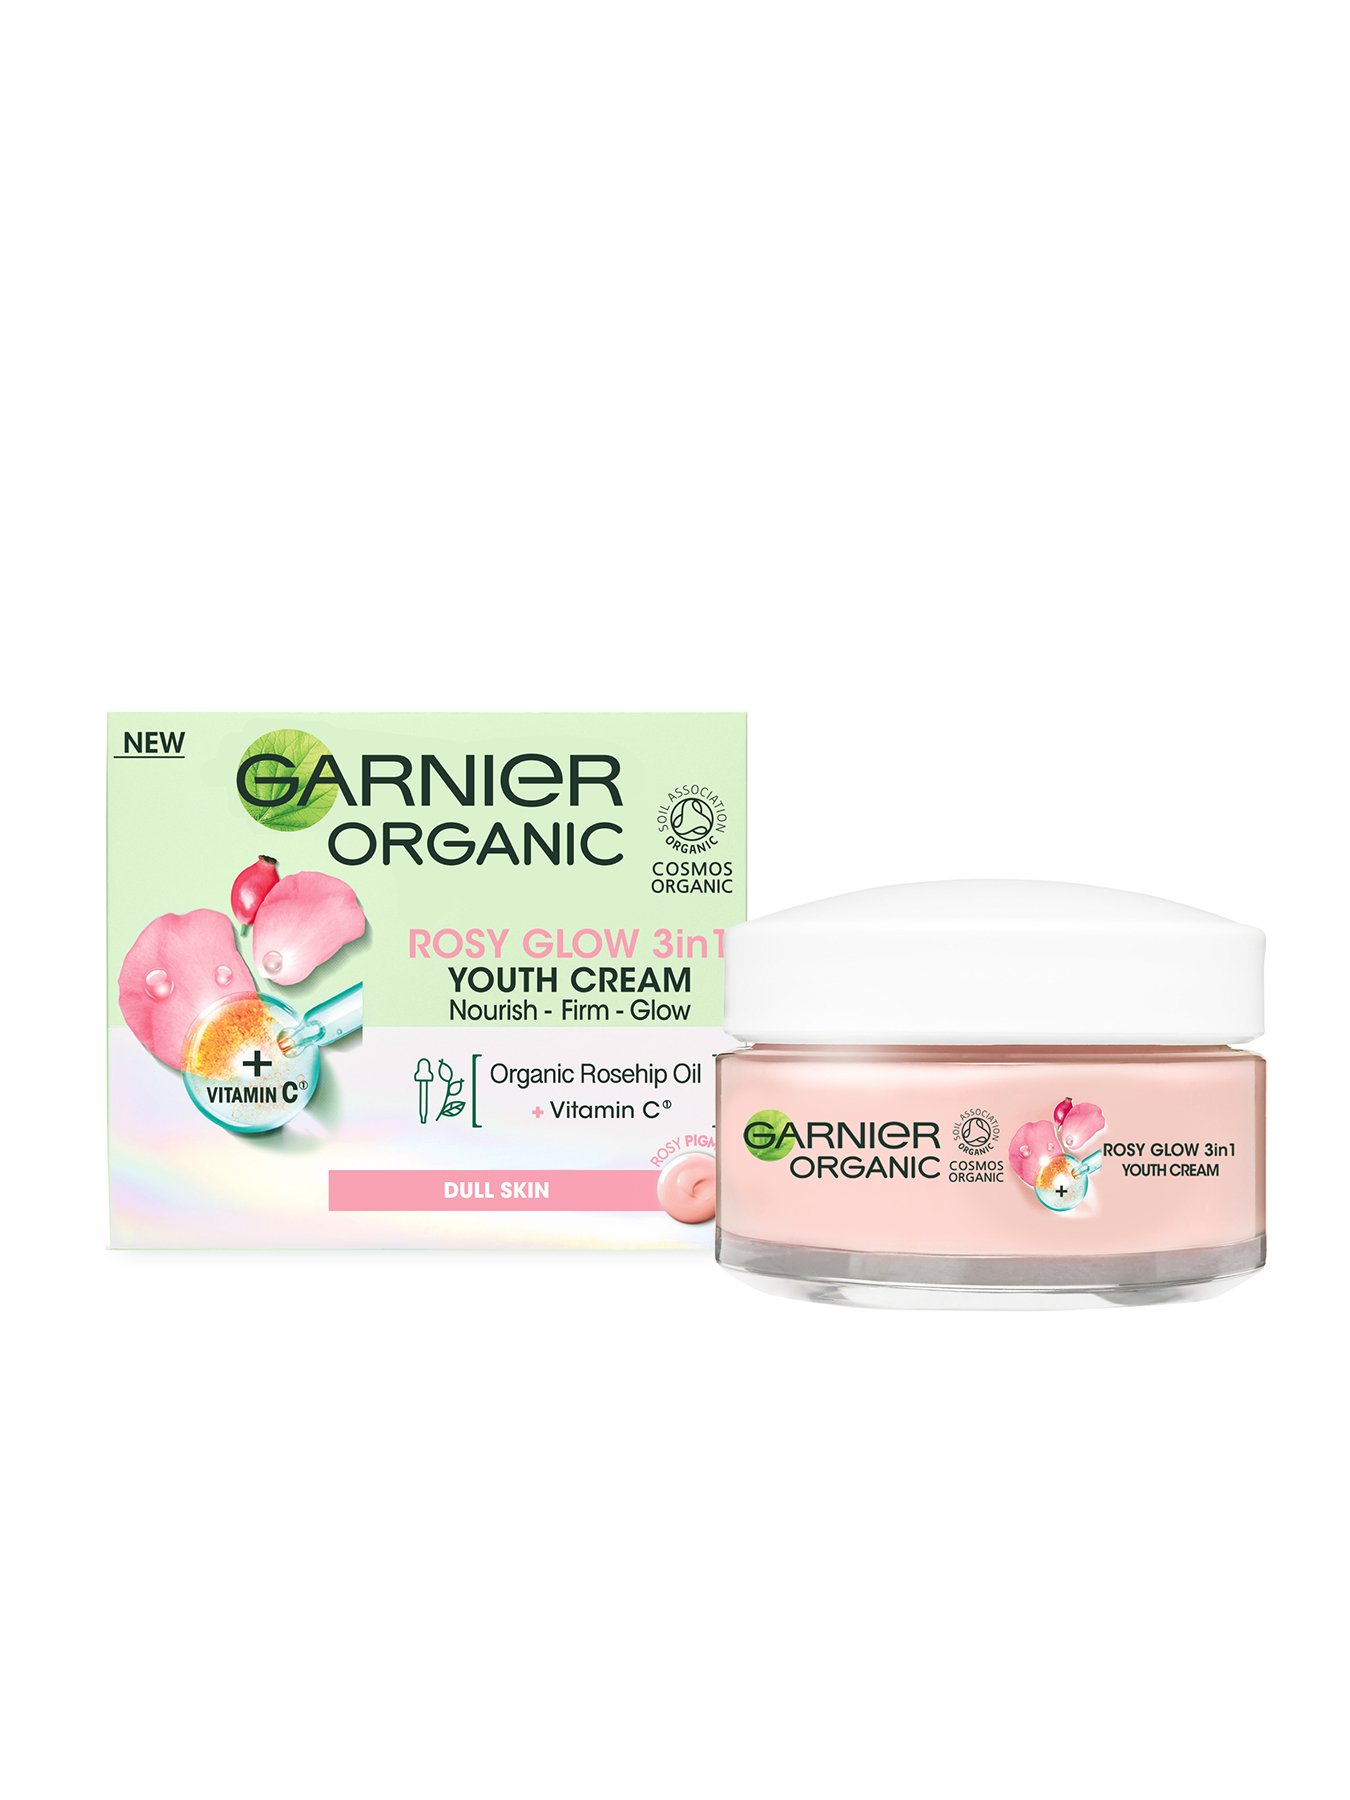 Garnier Organic Rosy Glow 3in1 Youth Cream 50ml tub with packaging